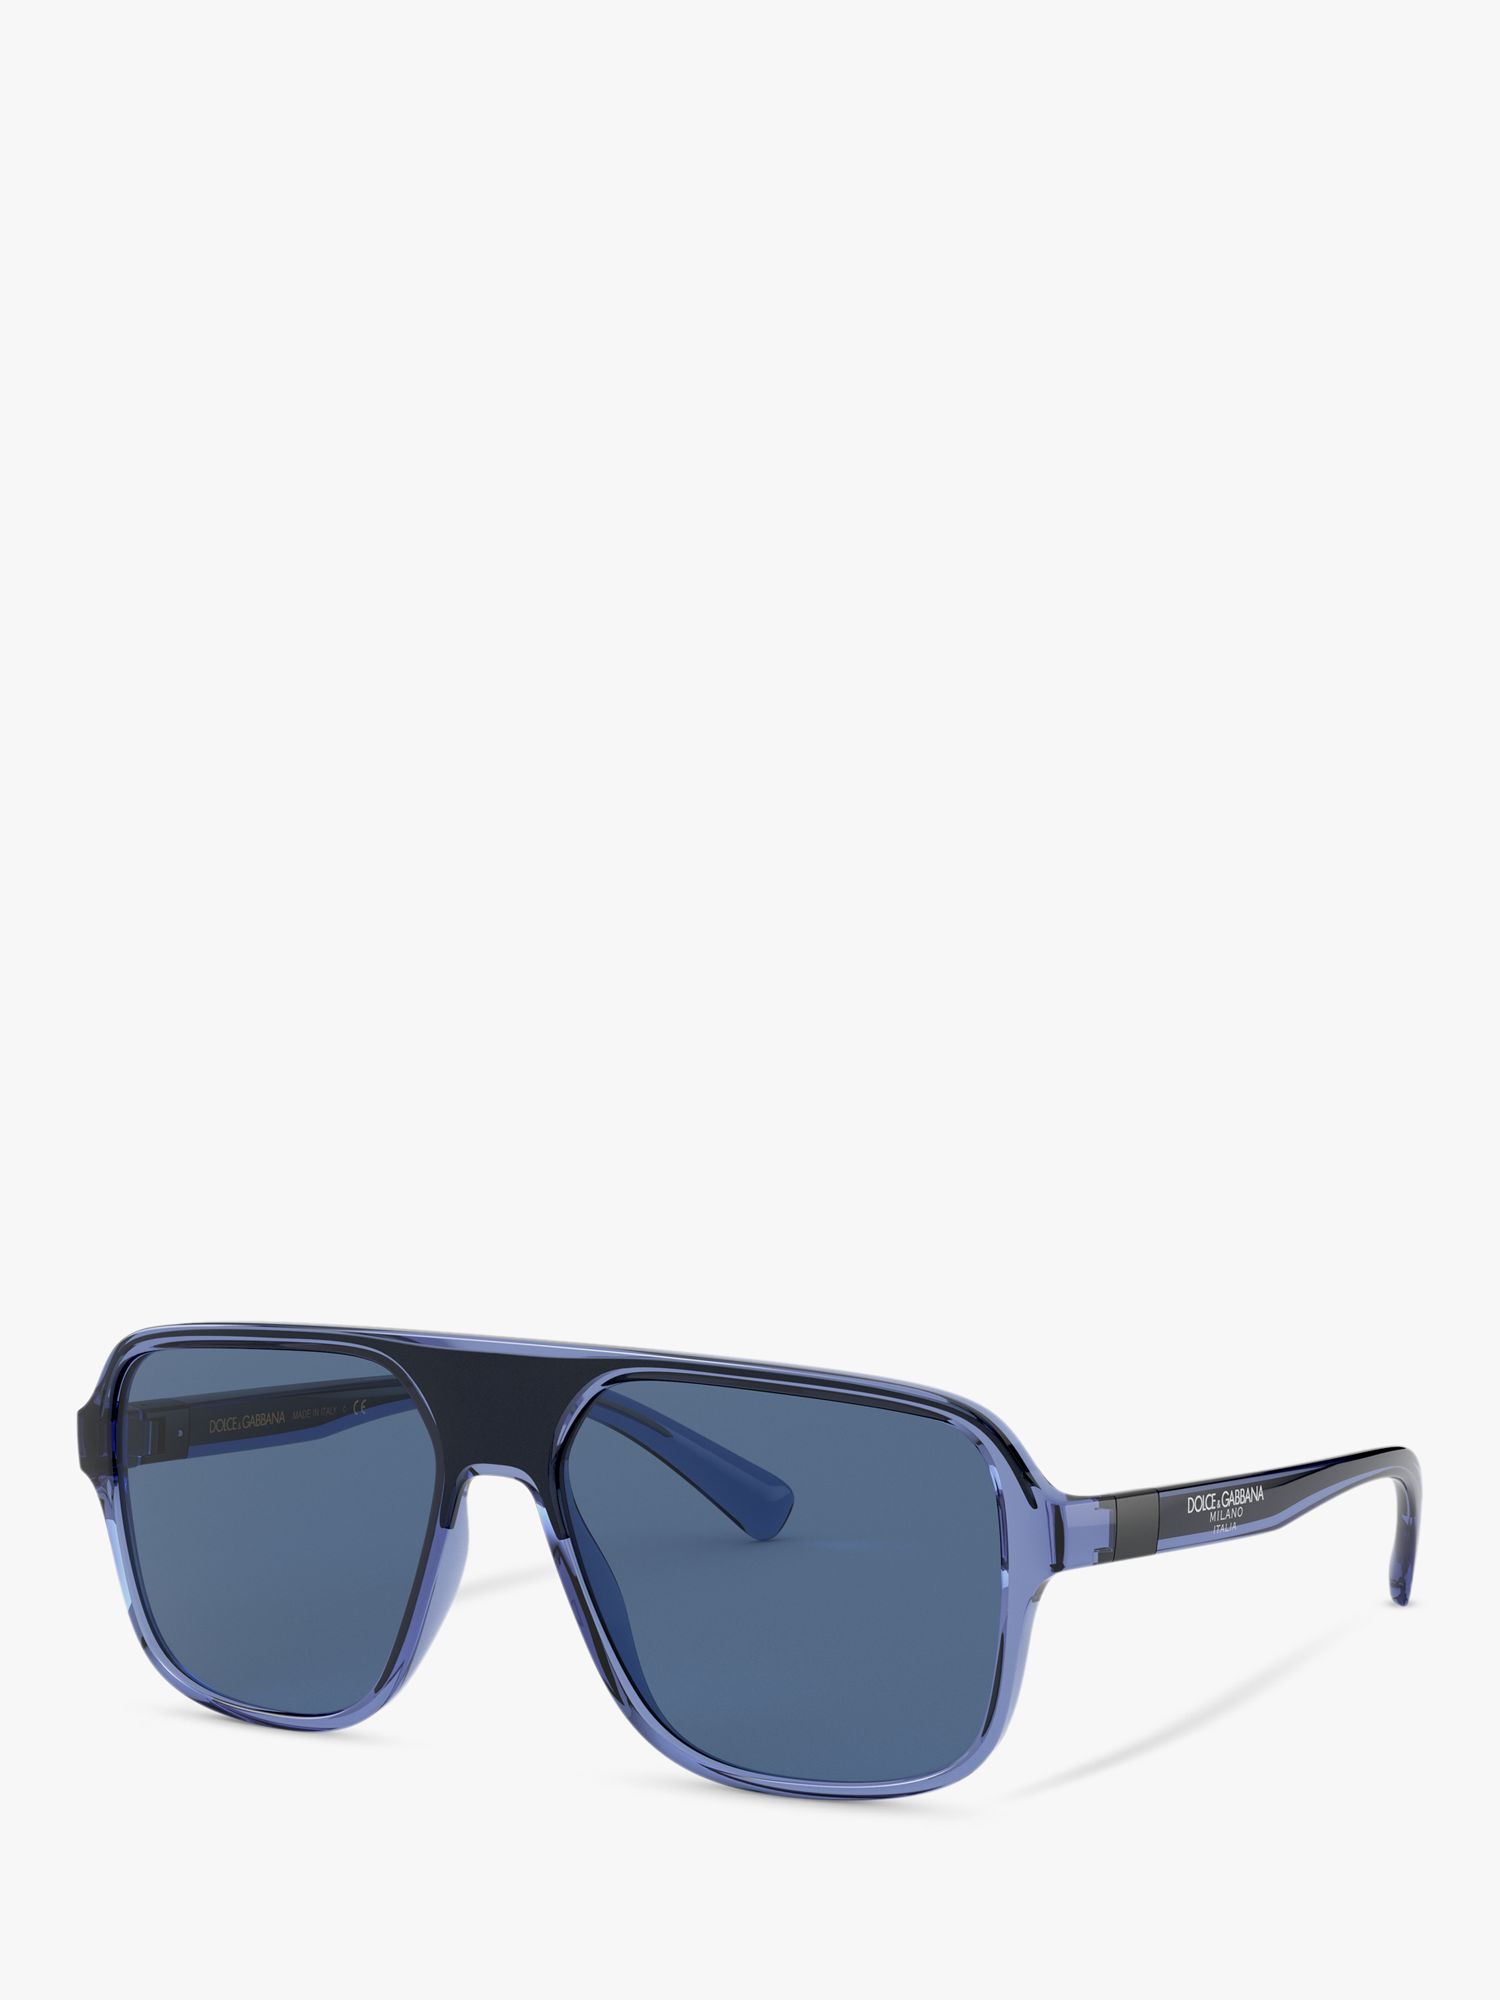 Dolce & Gabbana DG6134 Men's Square Sunglasses, Blue/Black at John Lewis &  Partners